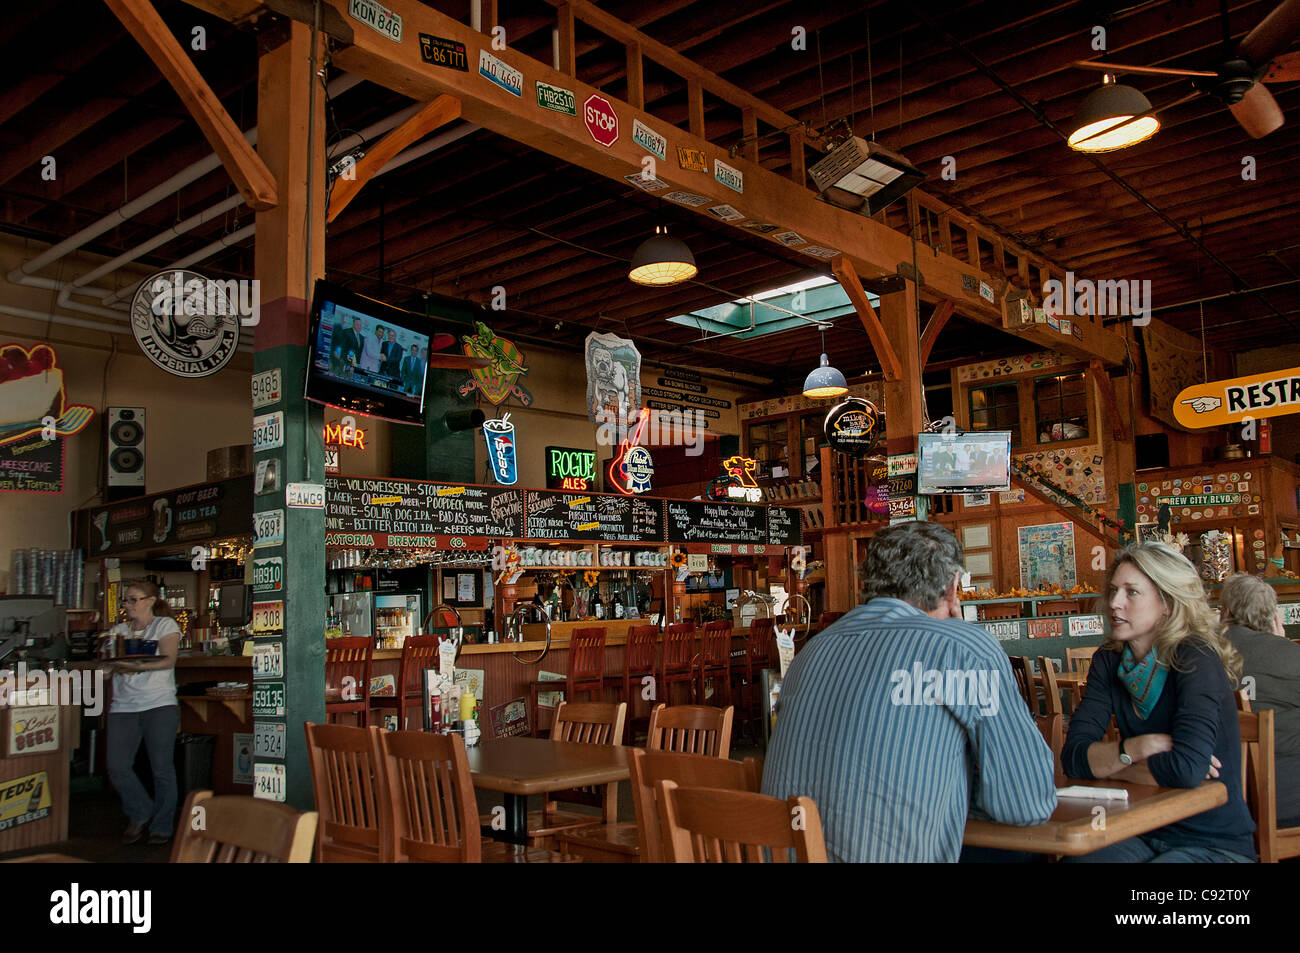 Astoria Brewing Co Bar Pub Restaurant Oregon State United States Stock Photo